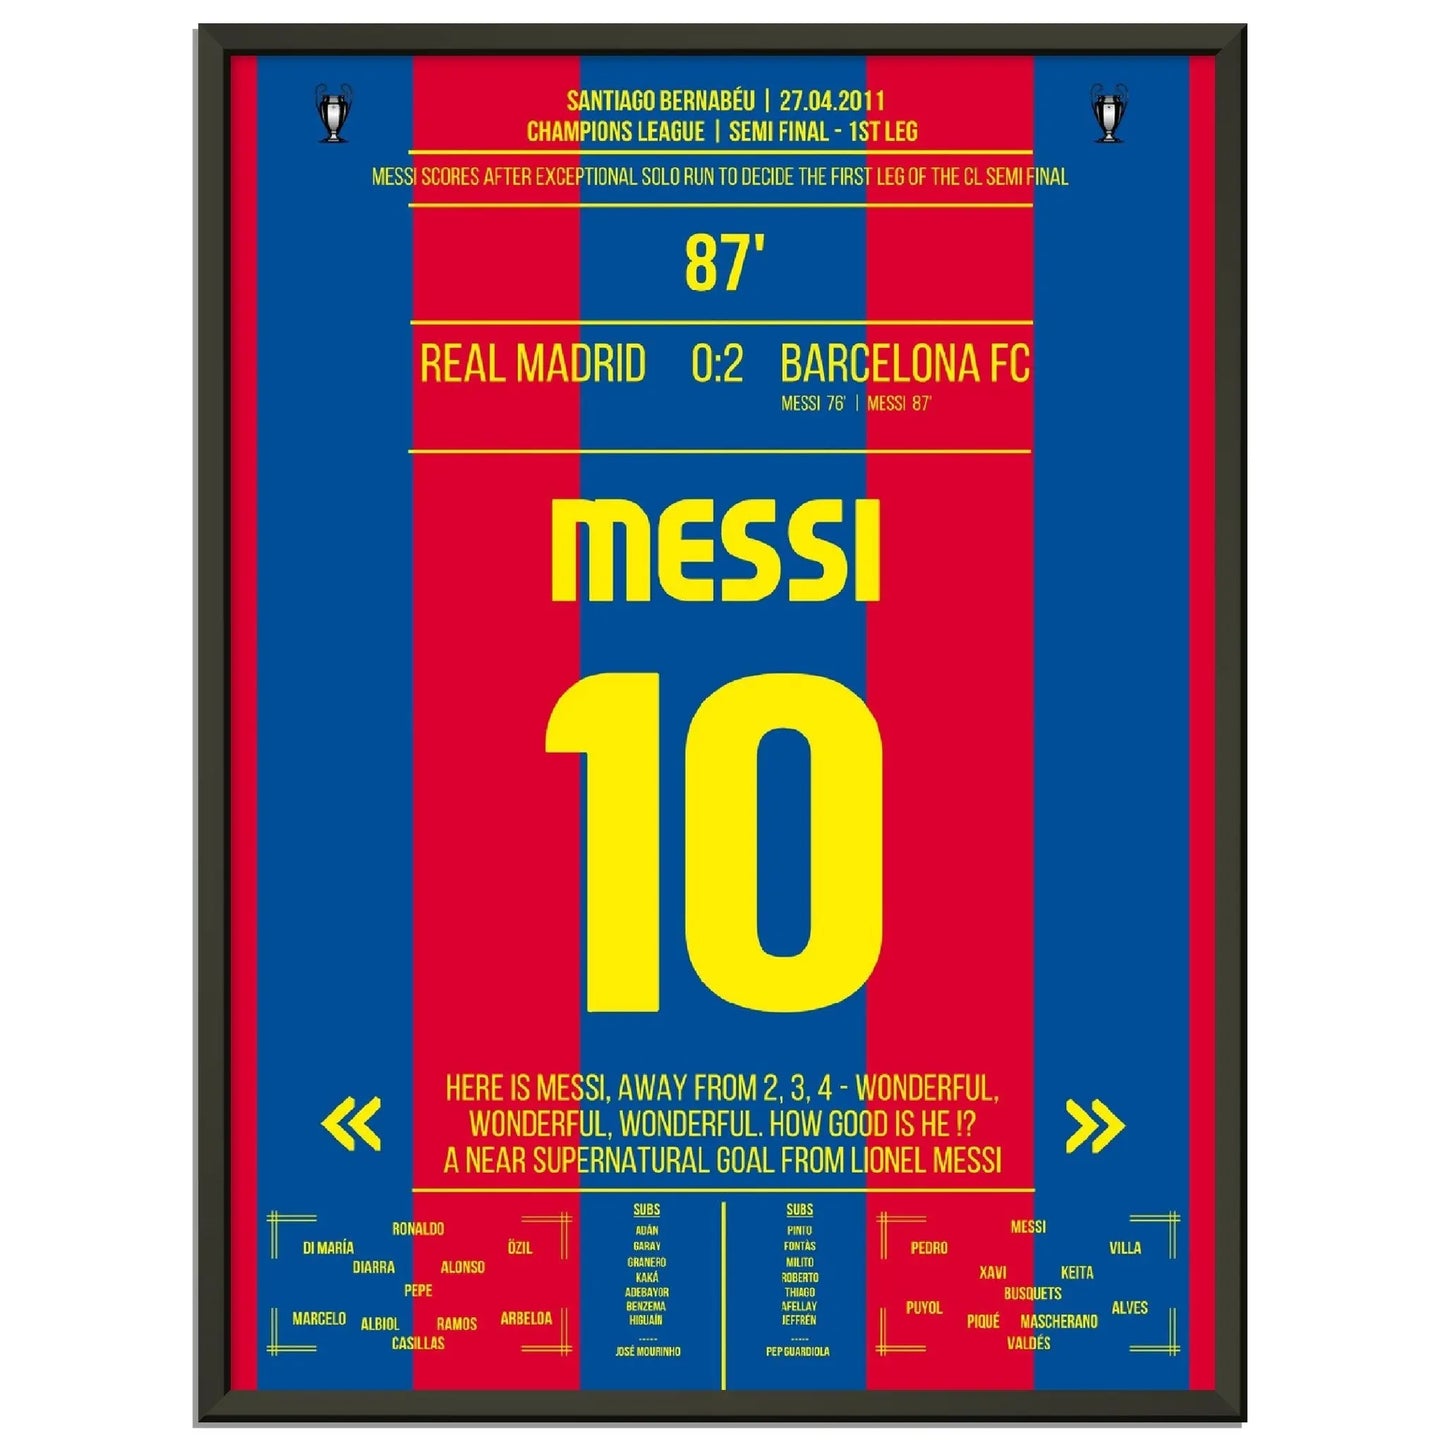 Messis unglaubliches Solo Tor gegen Real im Champions League Halbfinale 2011 